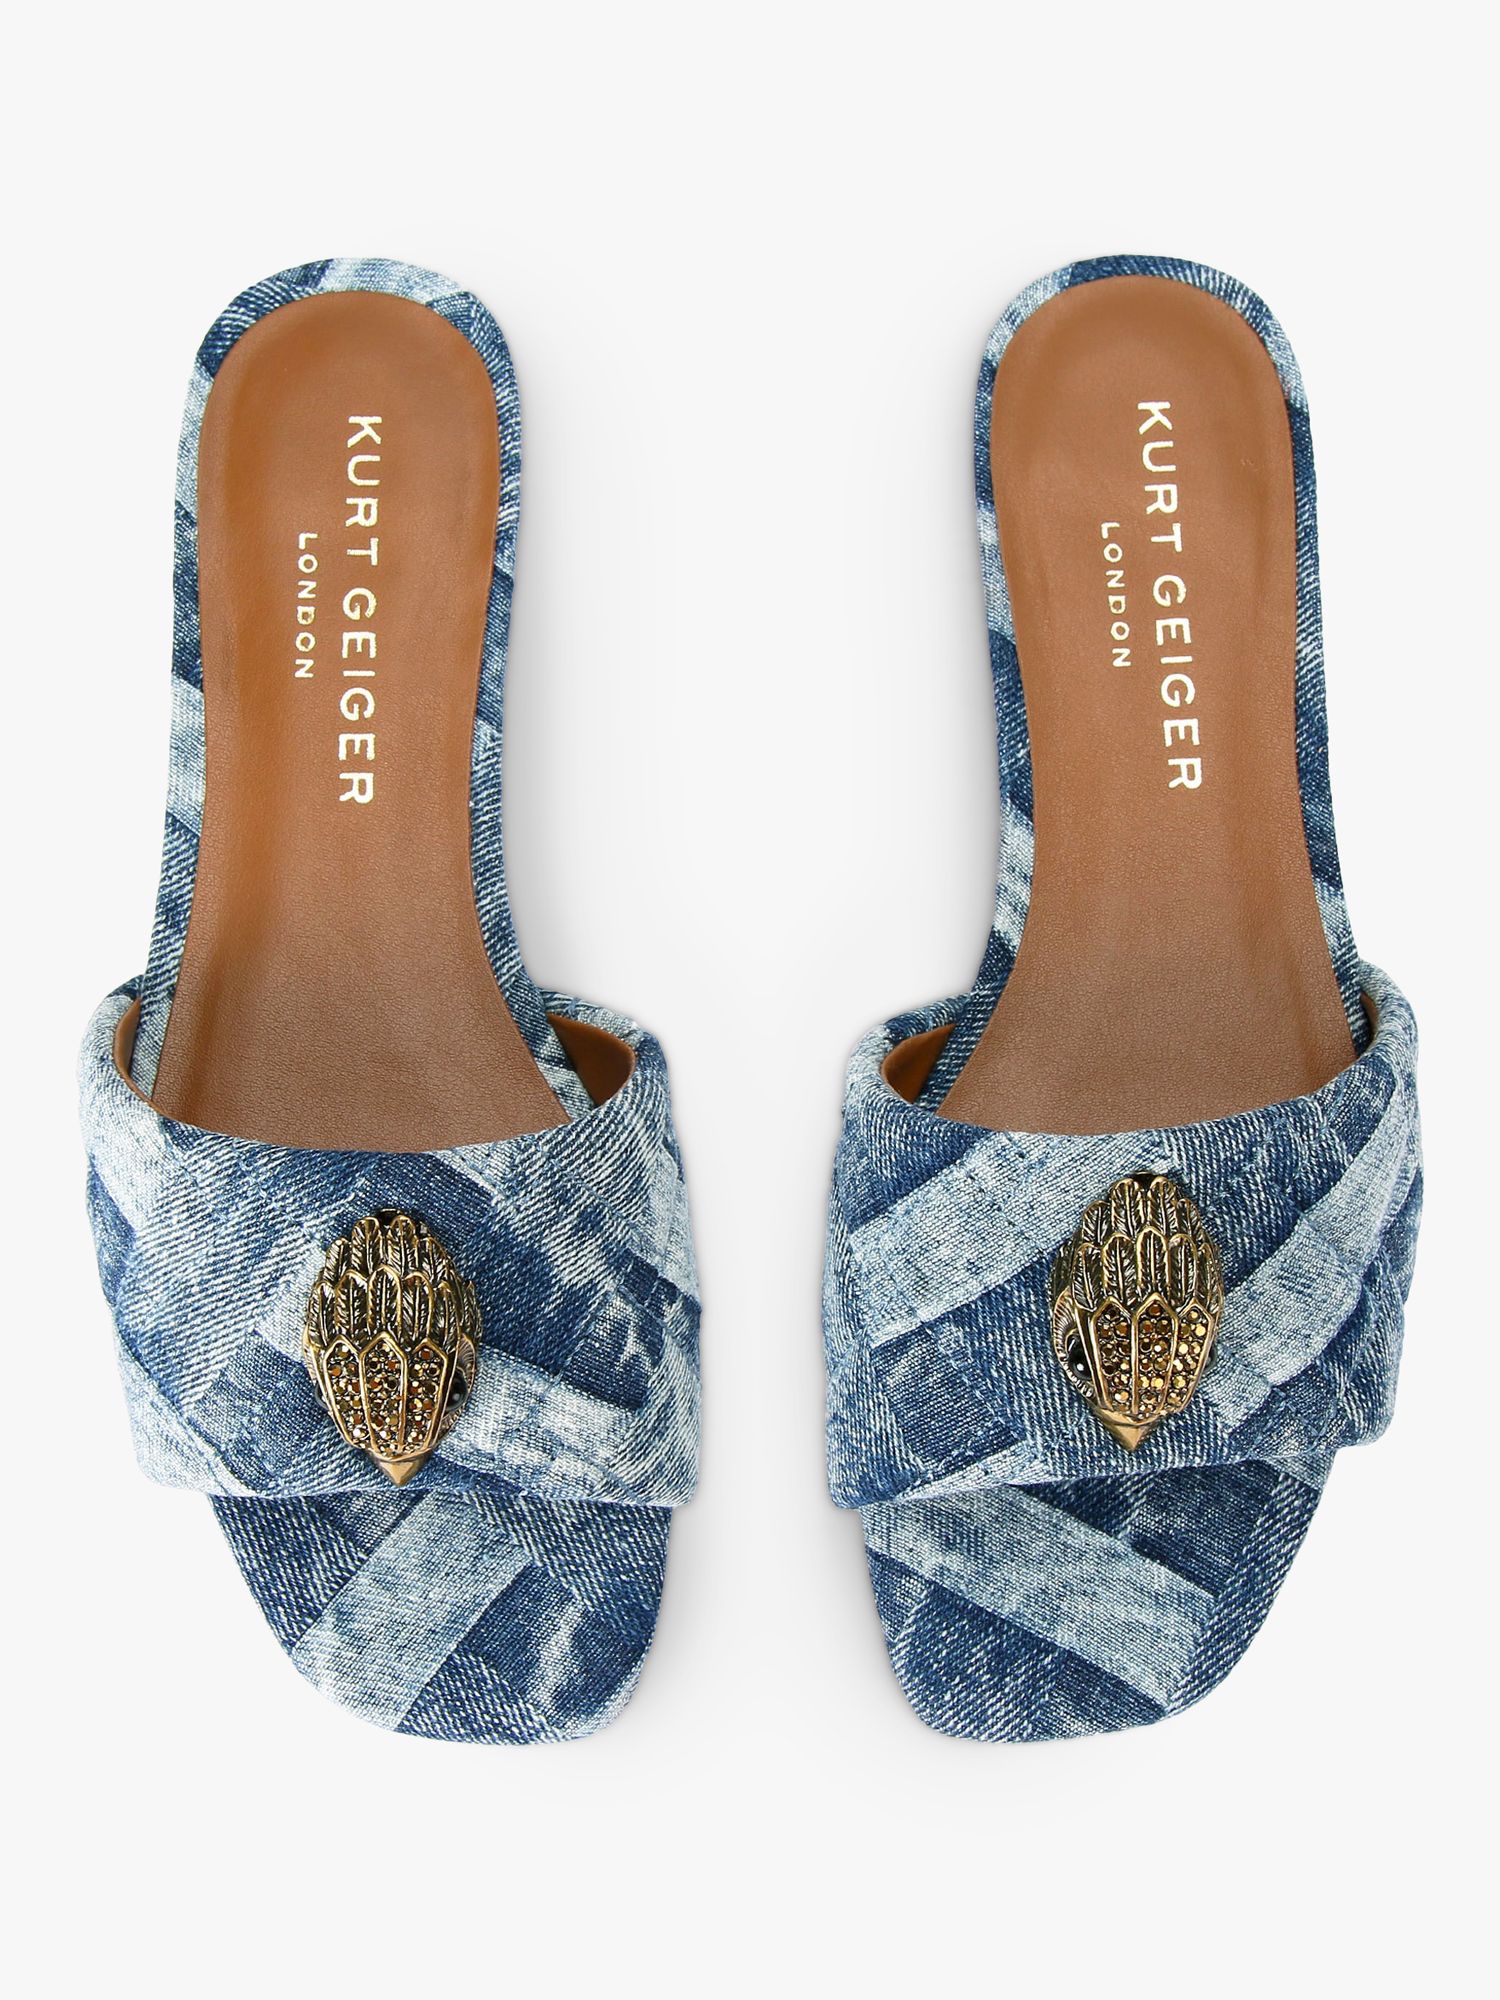 Buy Kurt Geiger London Kensington Flat Sandals, Blue Denim Online at johnlewis.com